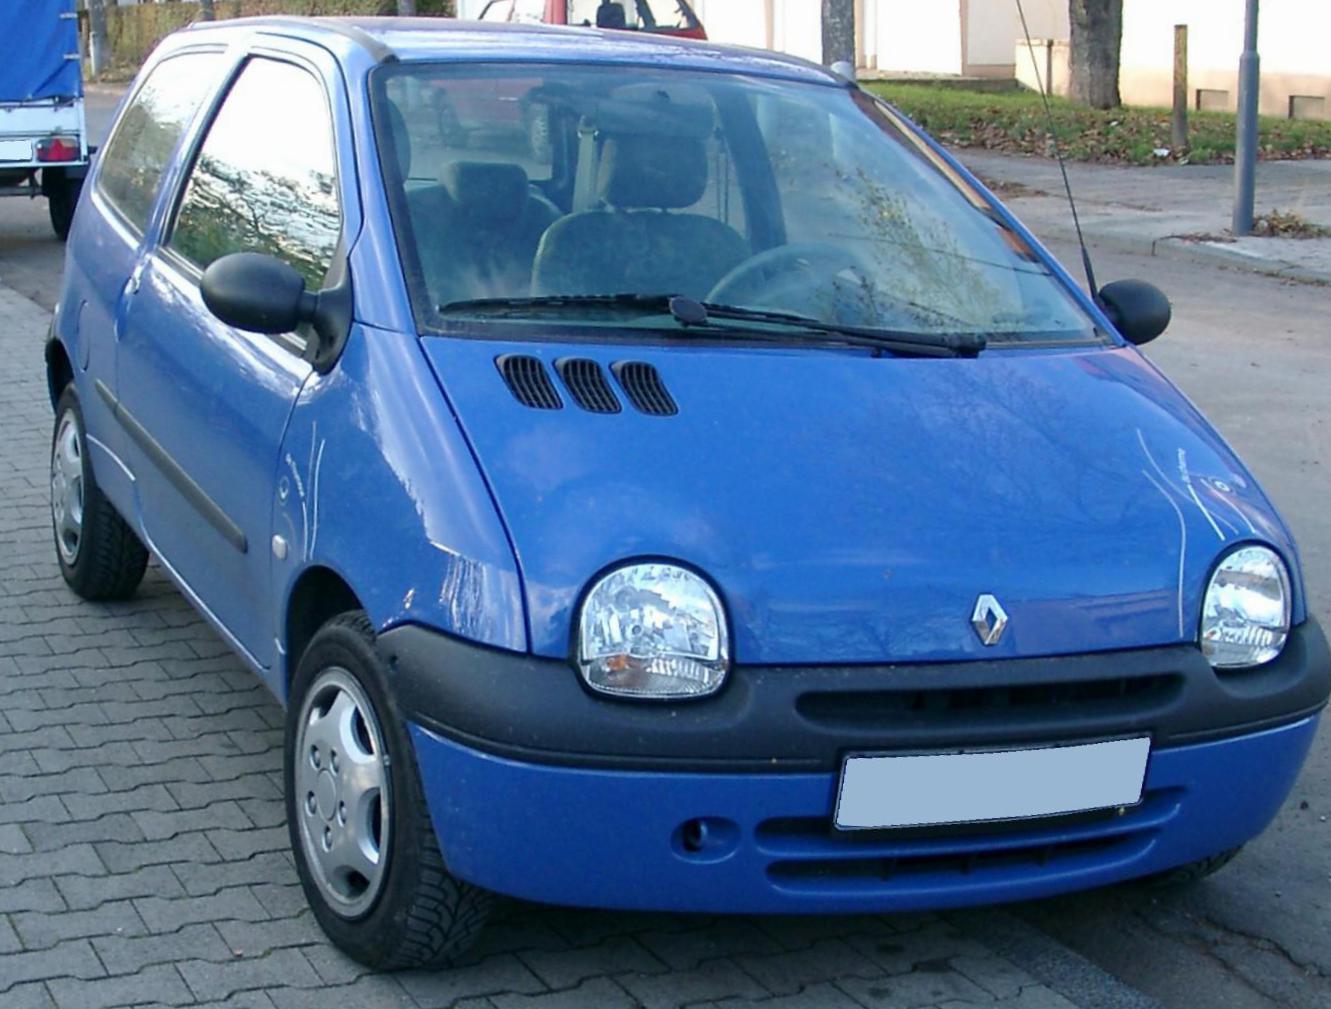 Twingo Renault parts 2005